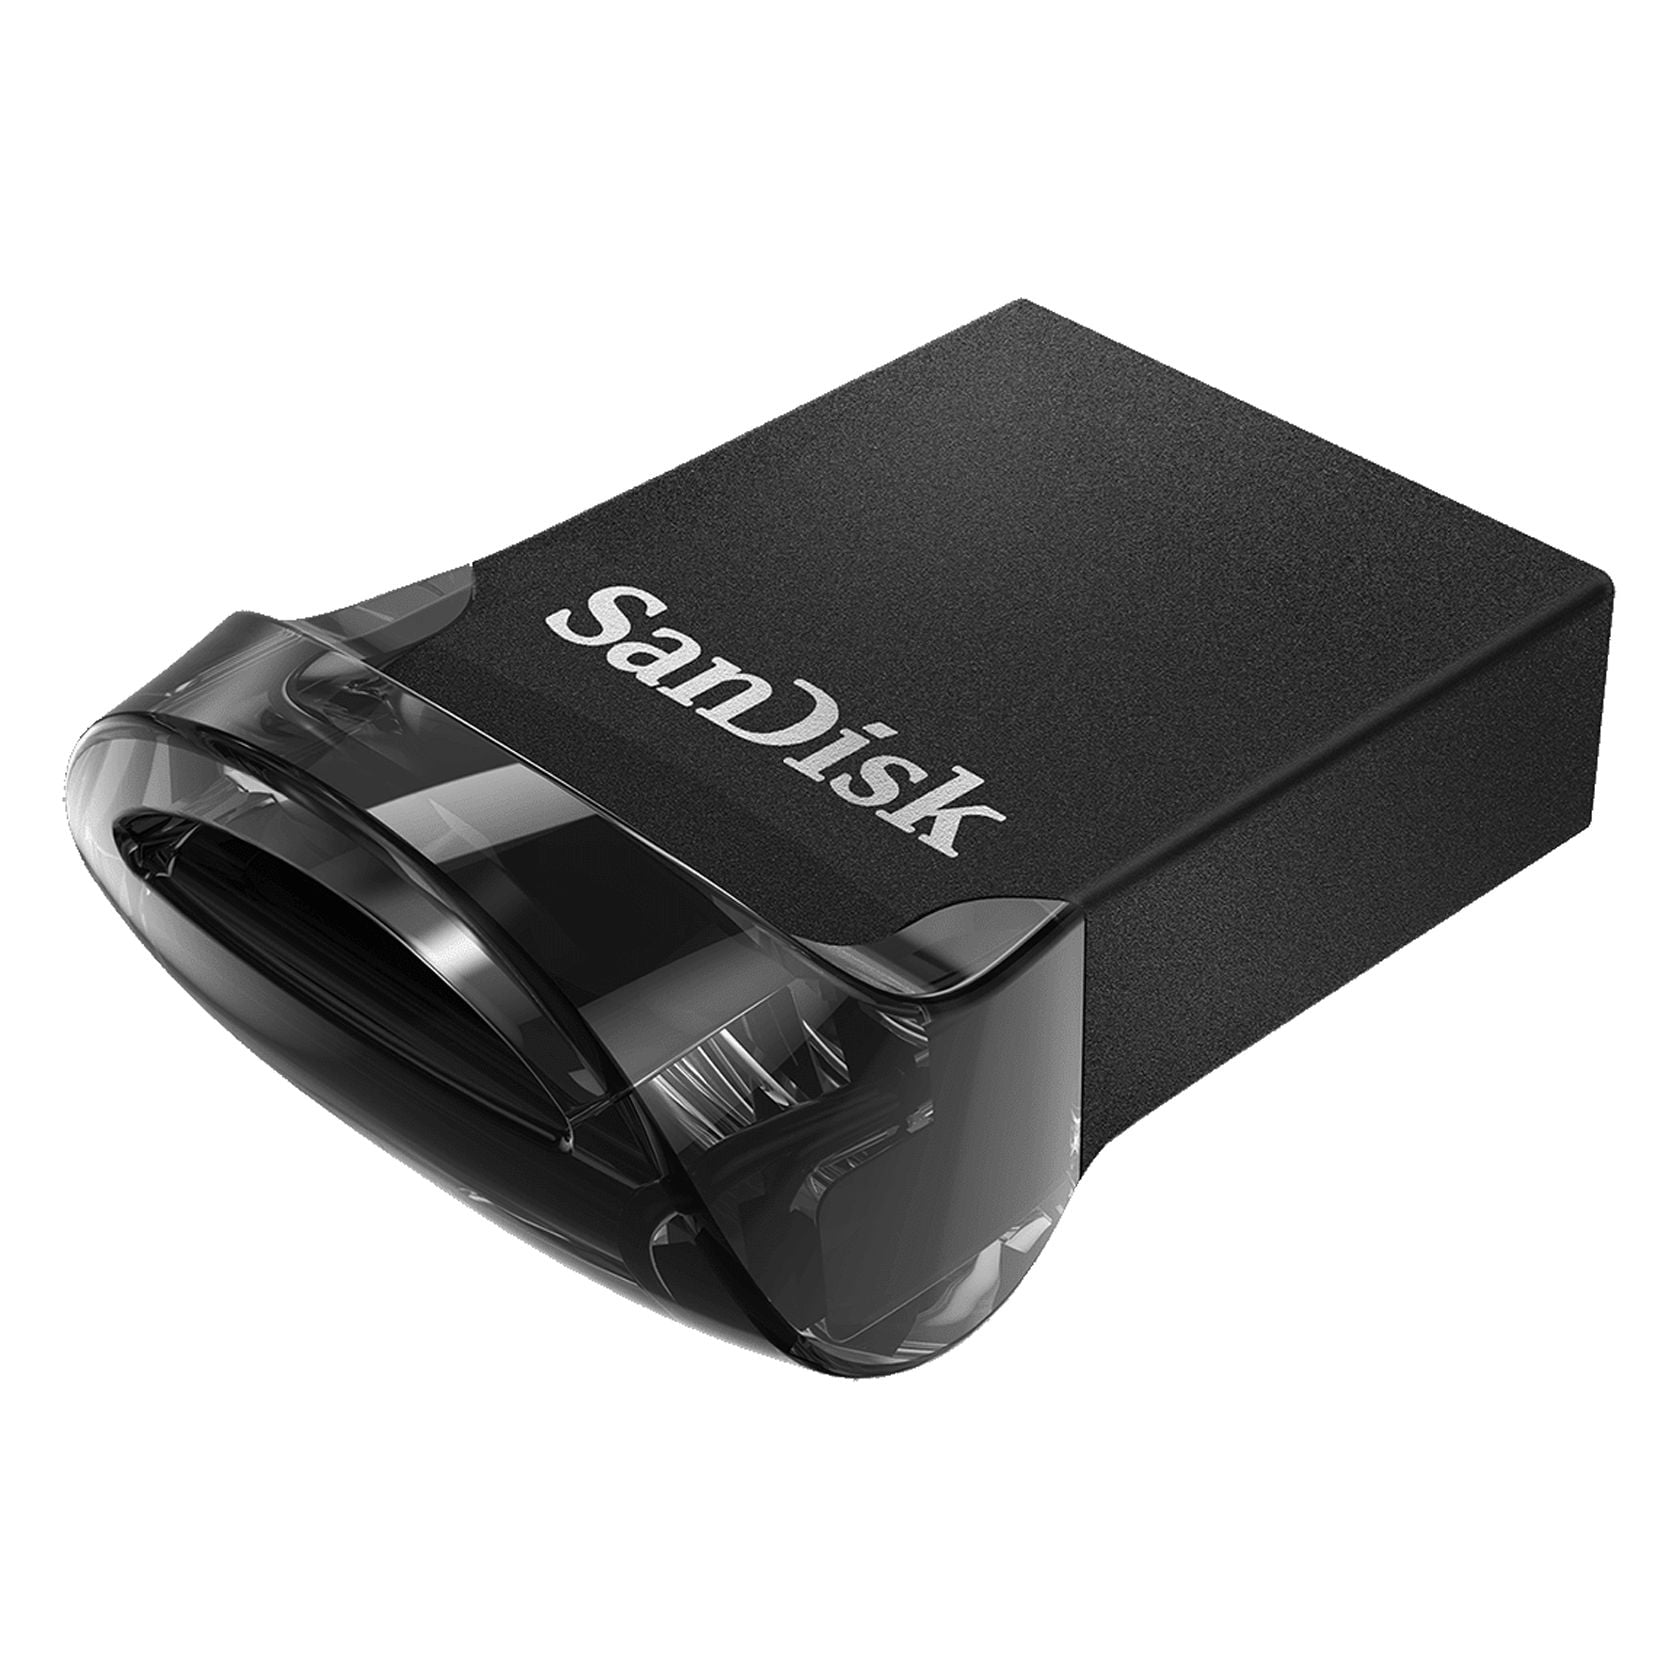 SanDisk - Clé USB 3.1 - Ultra Fit (16/32 Go)